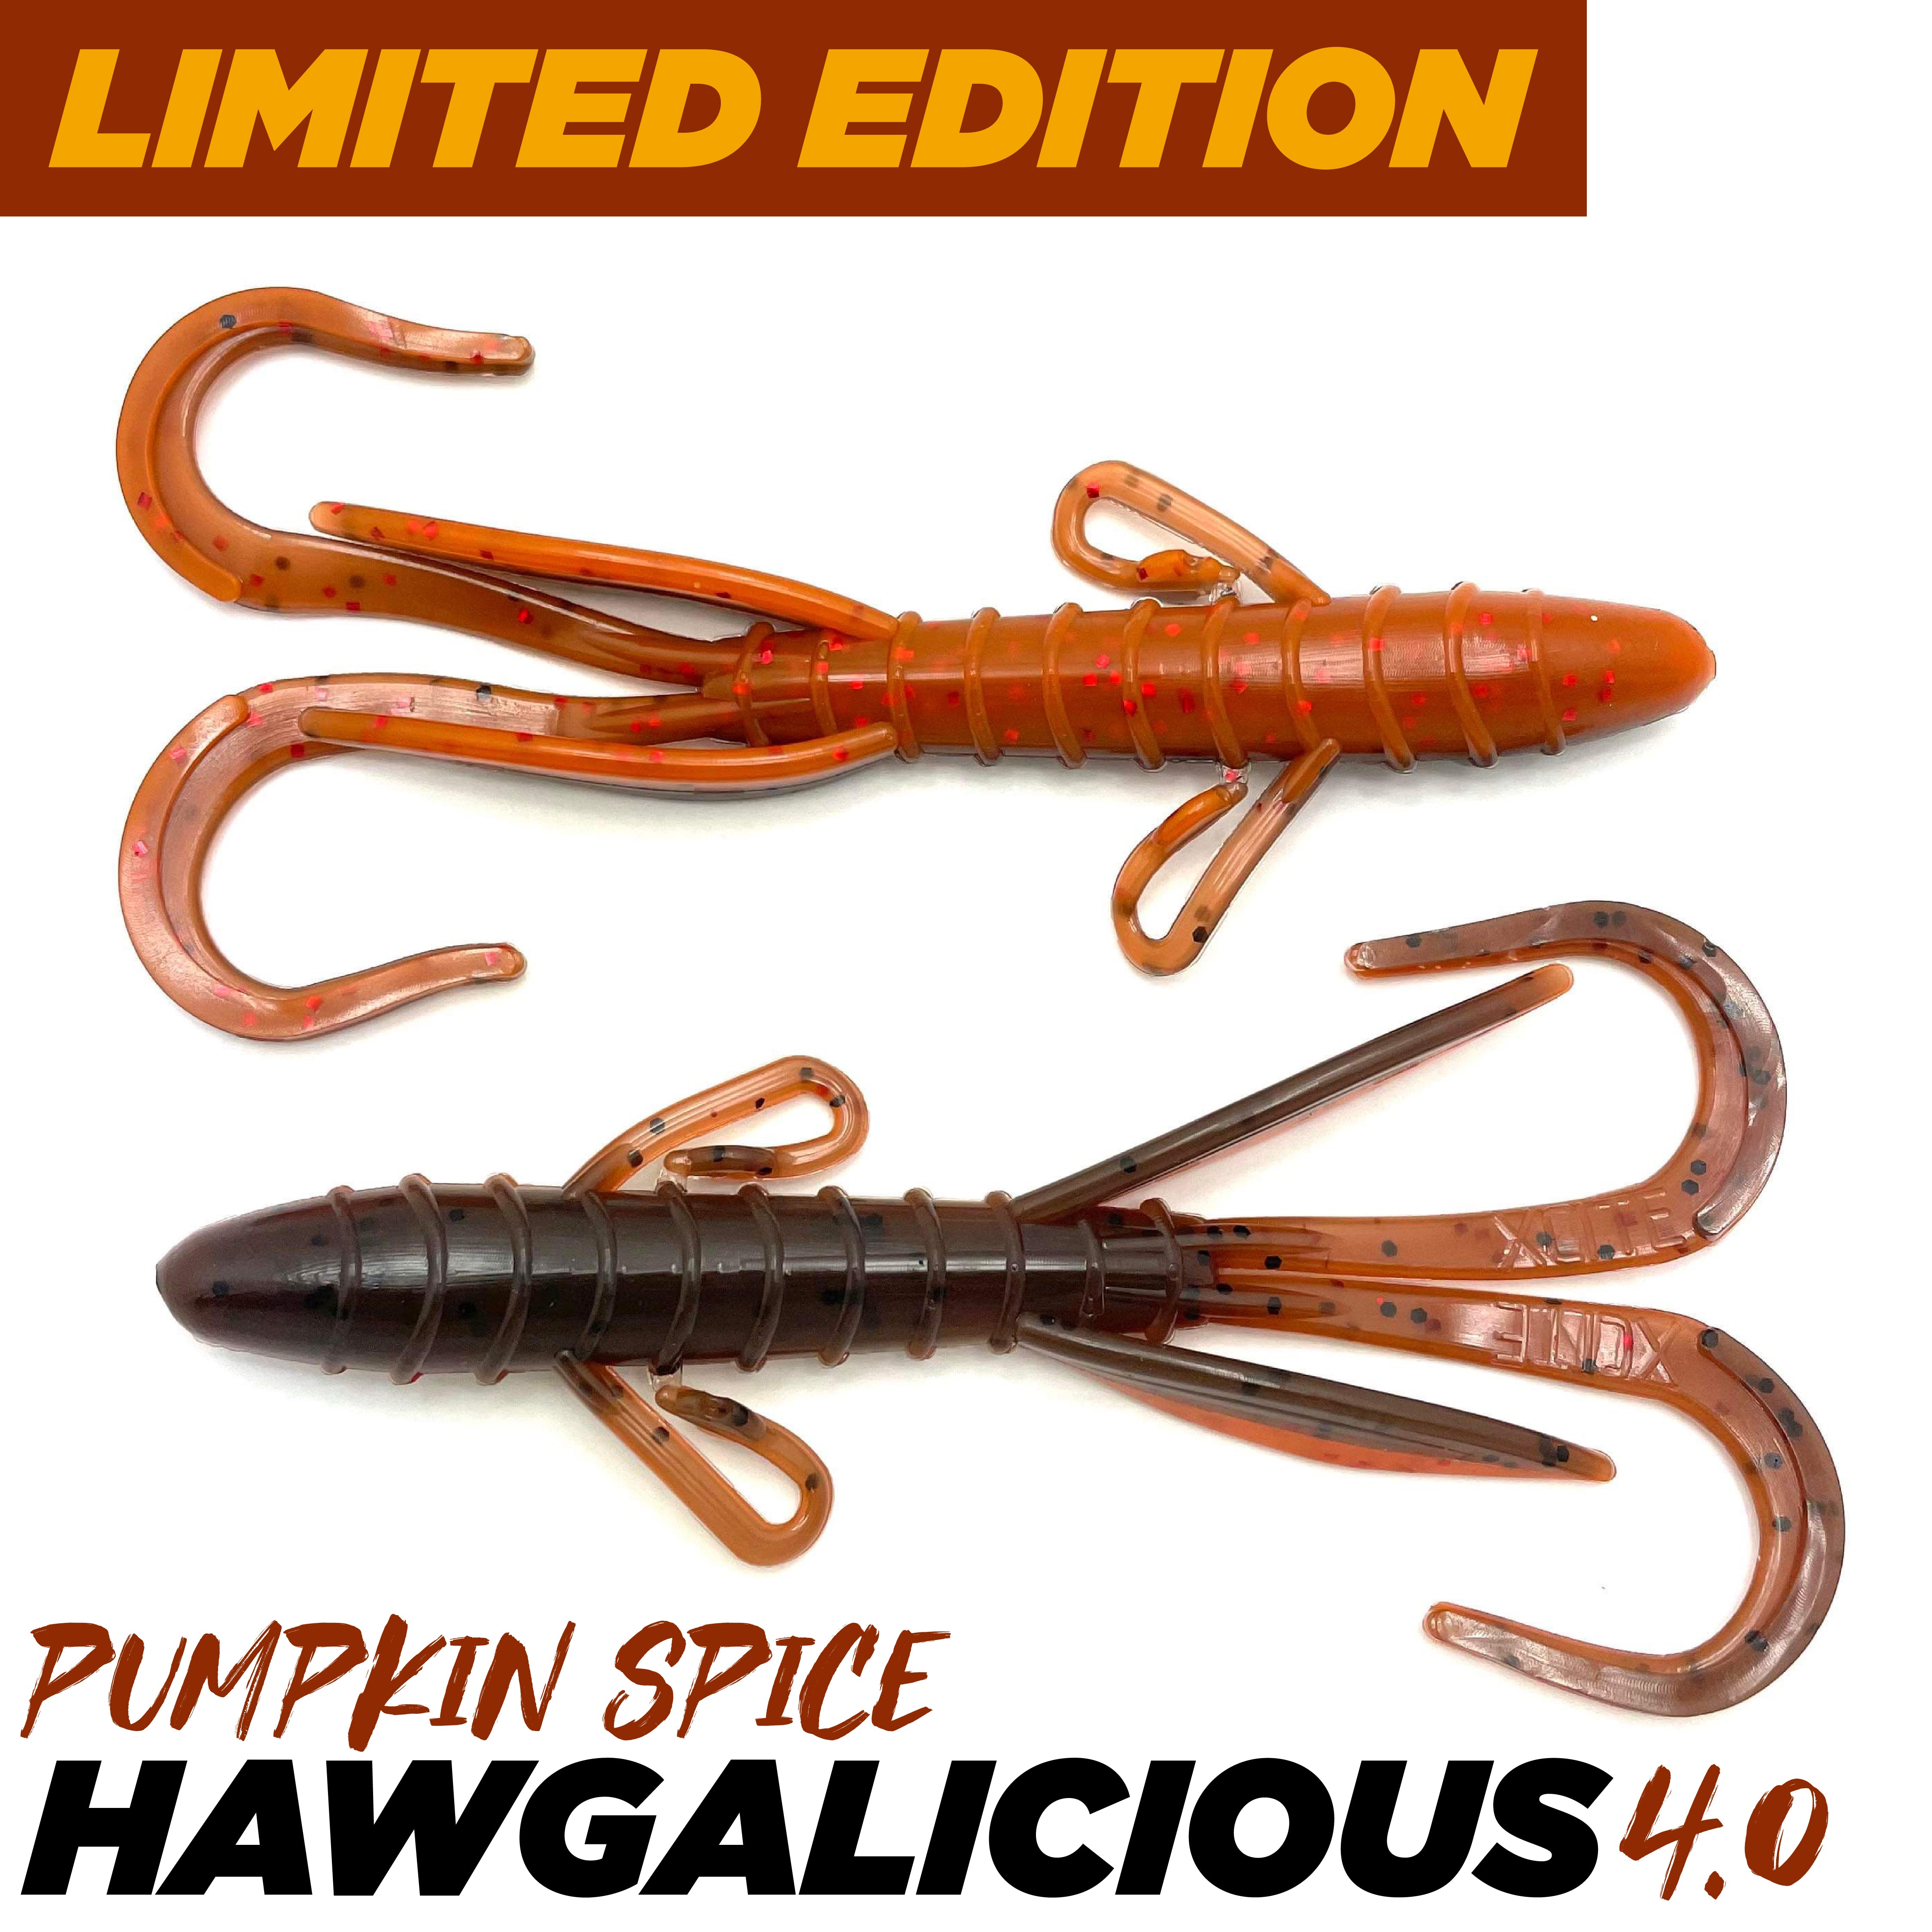 Hawgalicious 4.0 - Pumpkin Spice